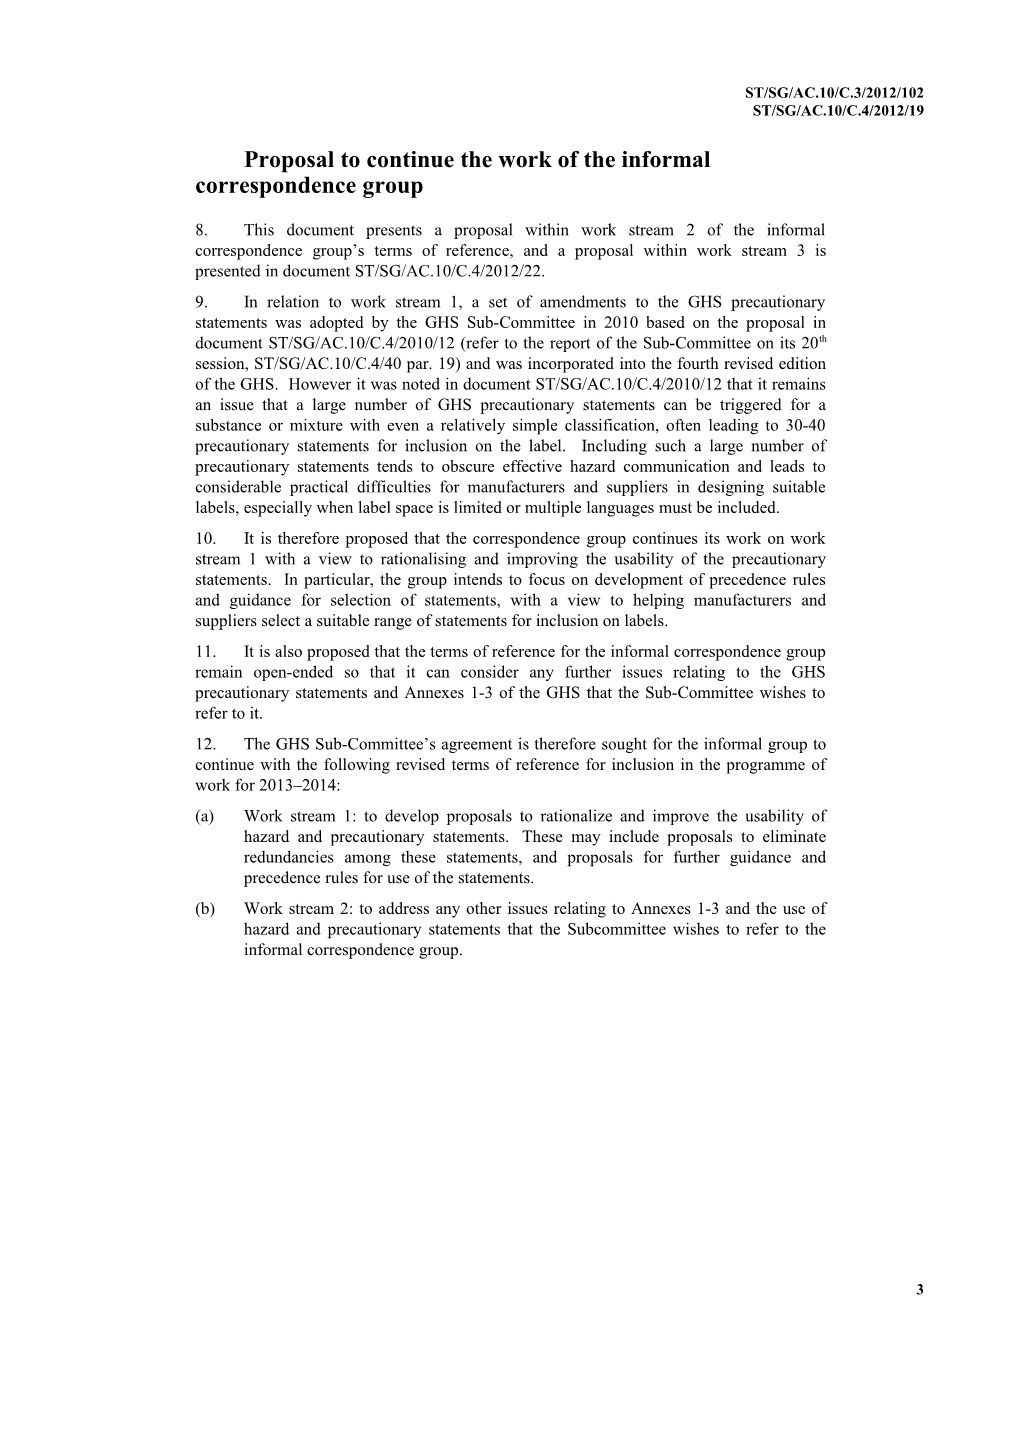 Amendments to Physical Hazard Precautionary Statements